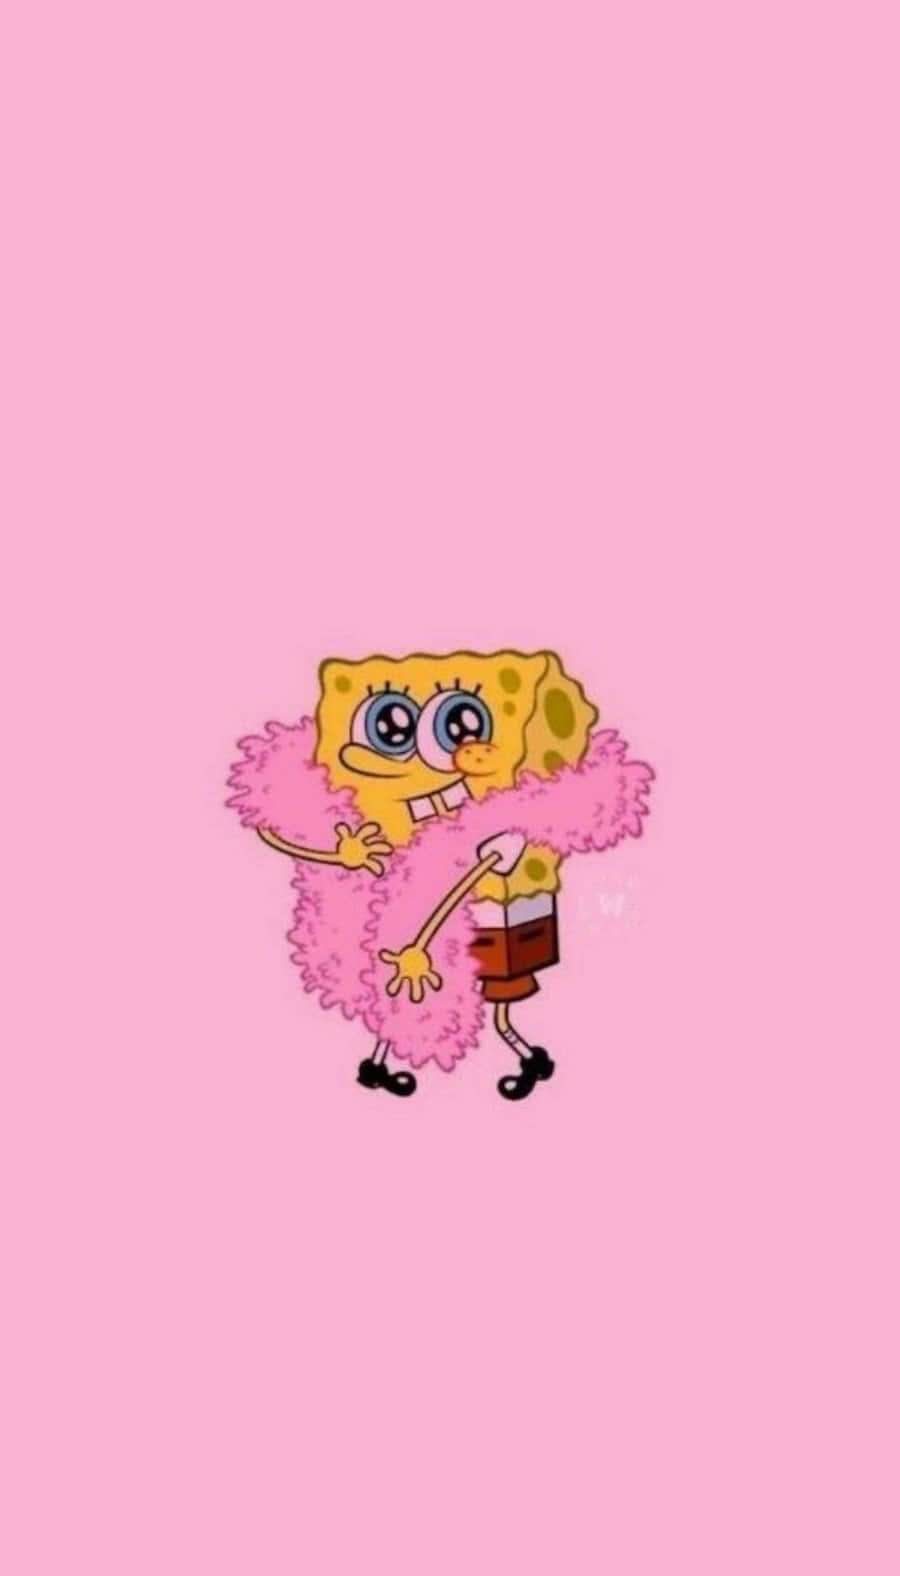 Spongebob In Pink Scarf Girly Tumblr